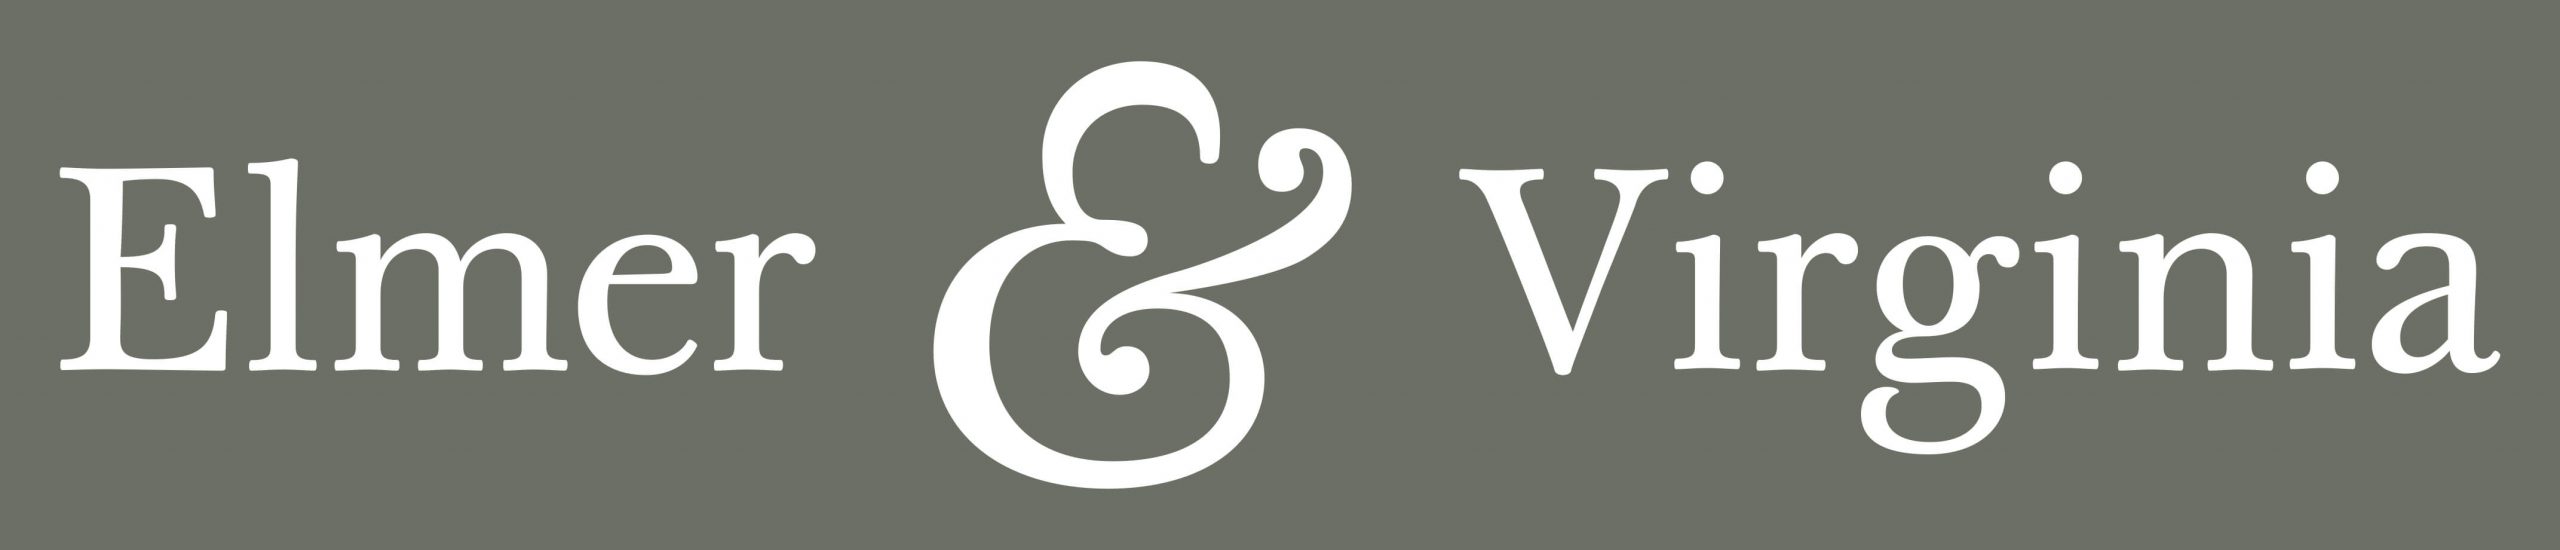 Logo on book. Elmer and Virginia